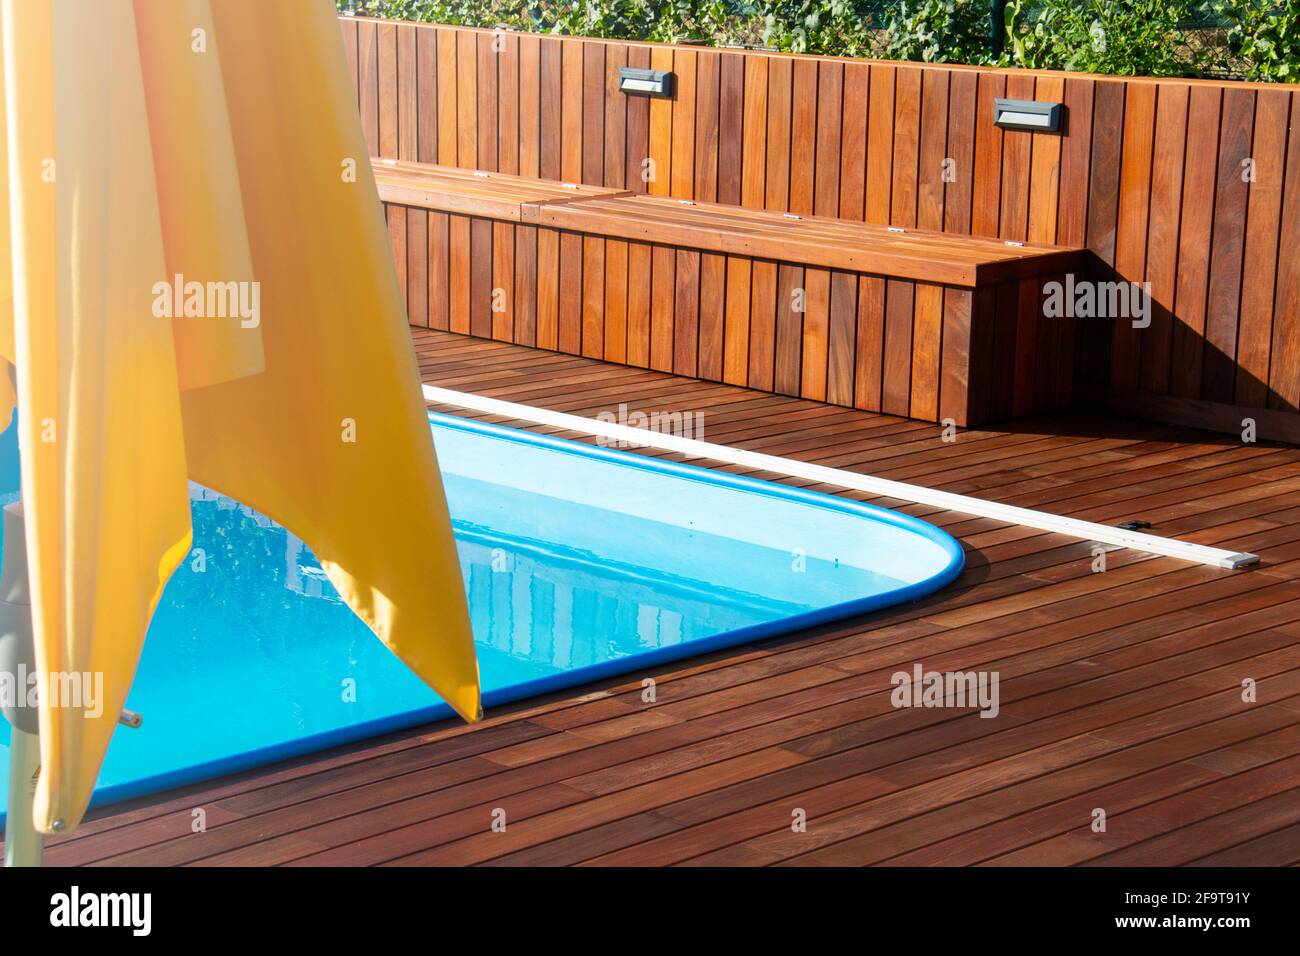 IPE Wood Pool Deck Design, wunderschöne Ipe Hartholz-Terrasse um den Pool-Rand, horizontale und vertikale Holzverkleidung Struktur Stockfoto